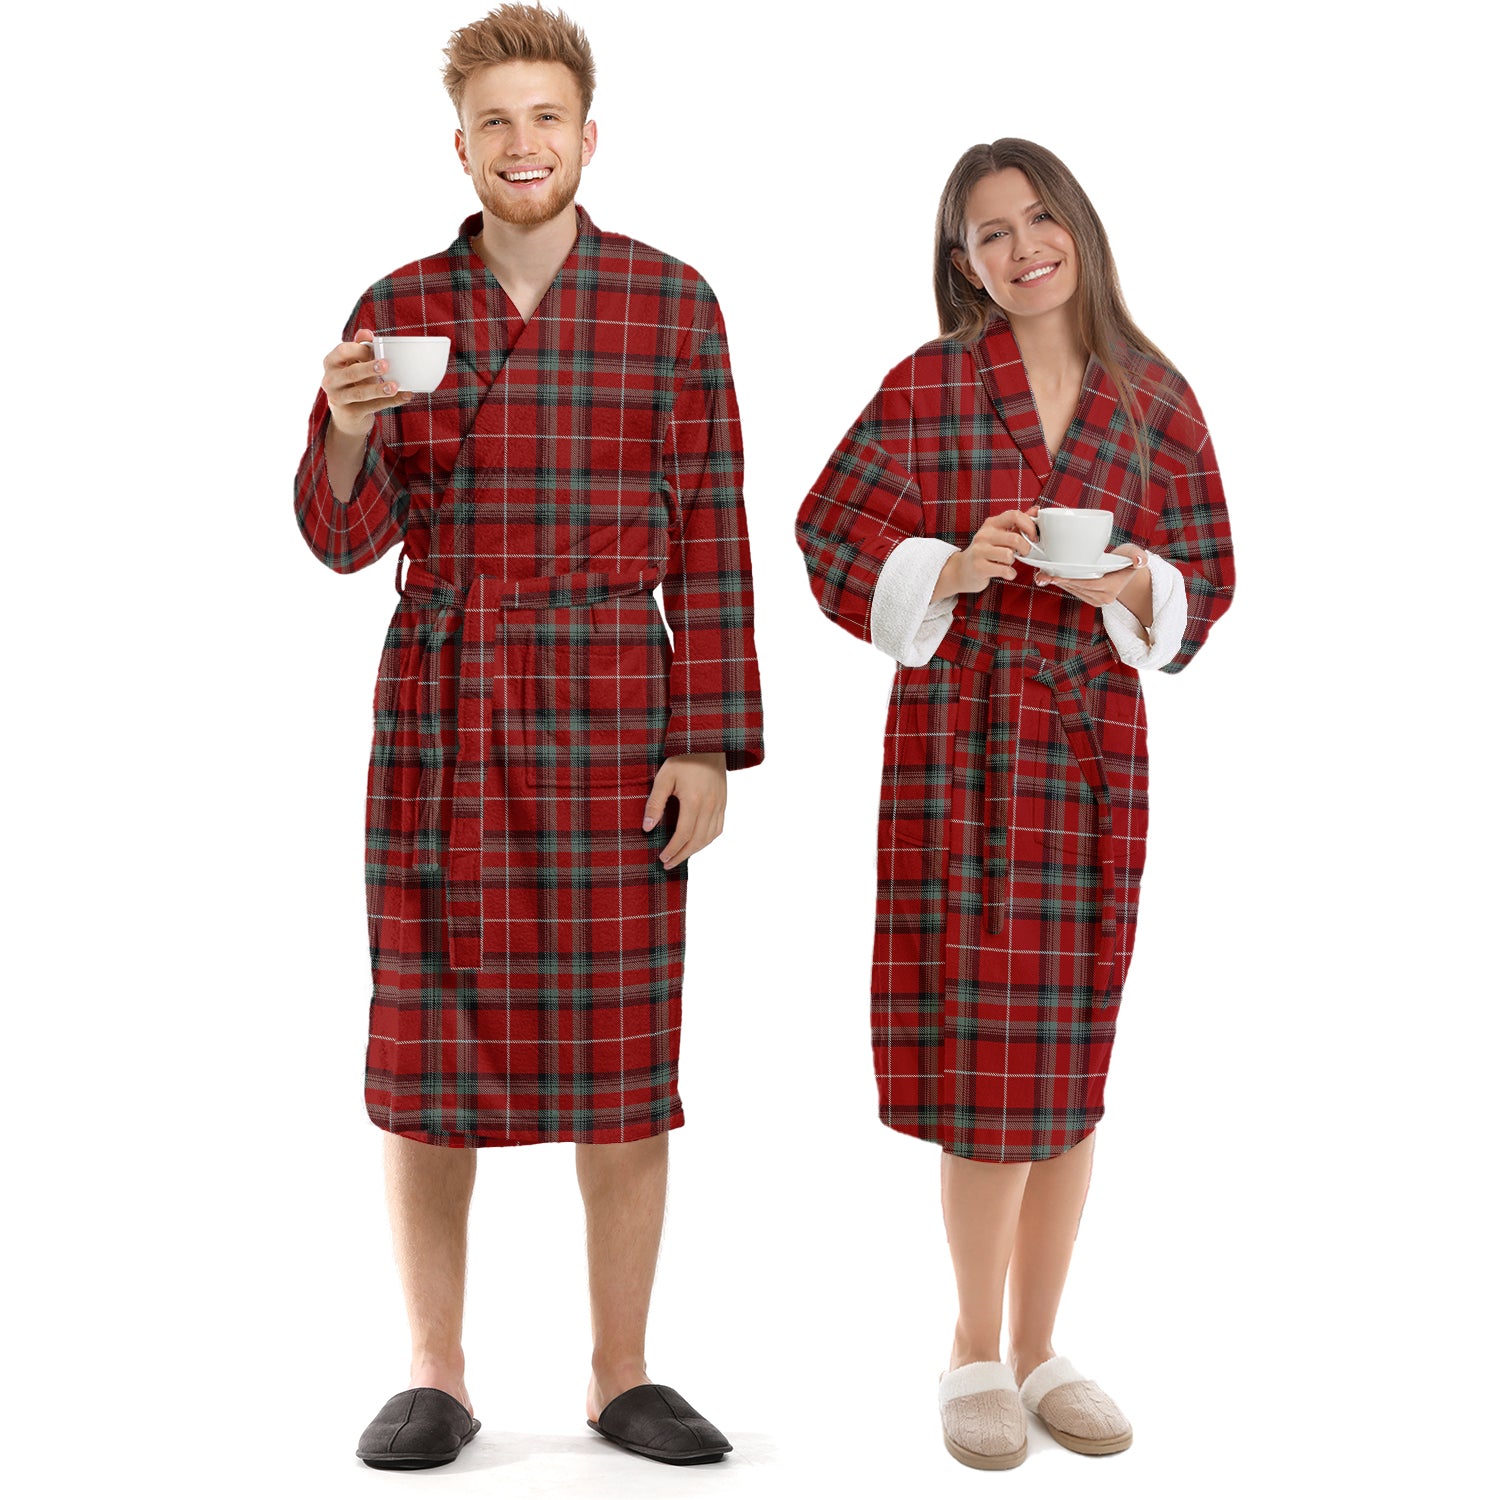 stuart-of-bute-tartan-bathrobe-tartan-mens-robe-tartan-womens-robe